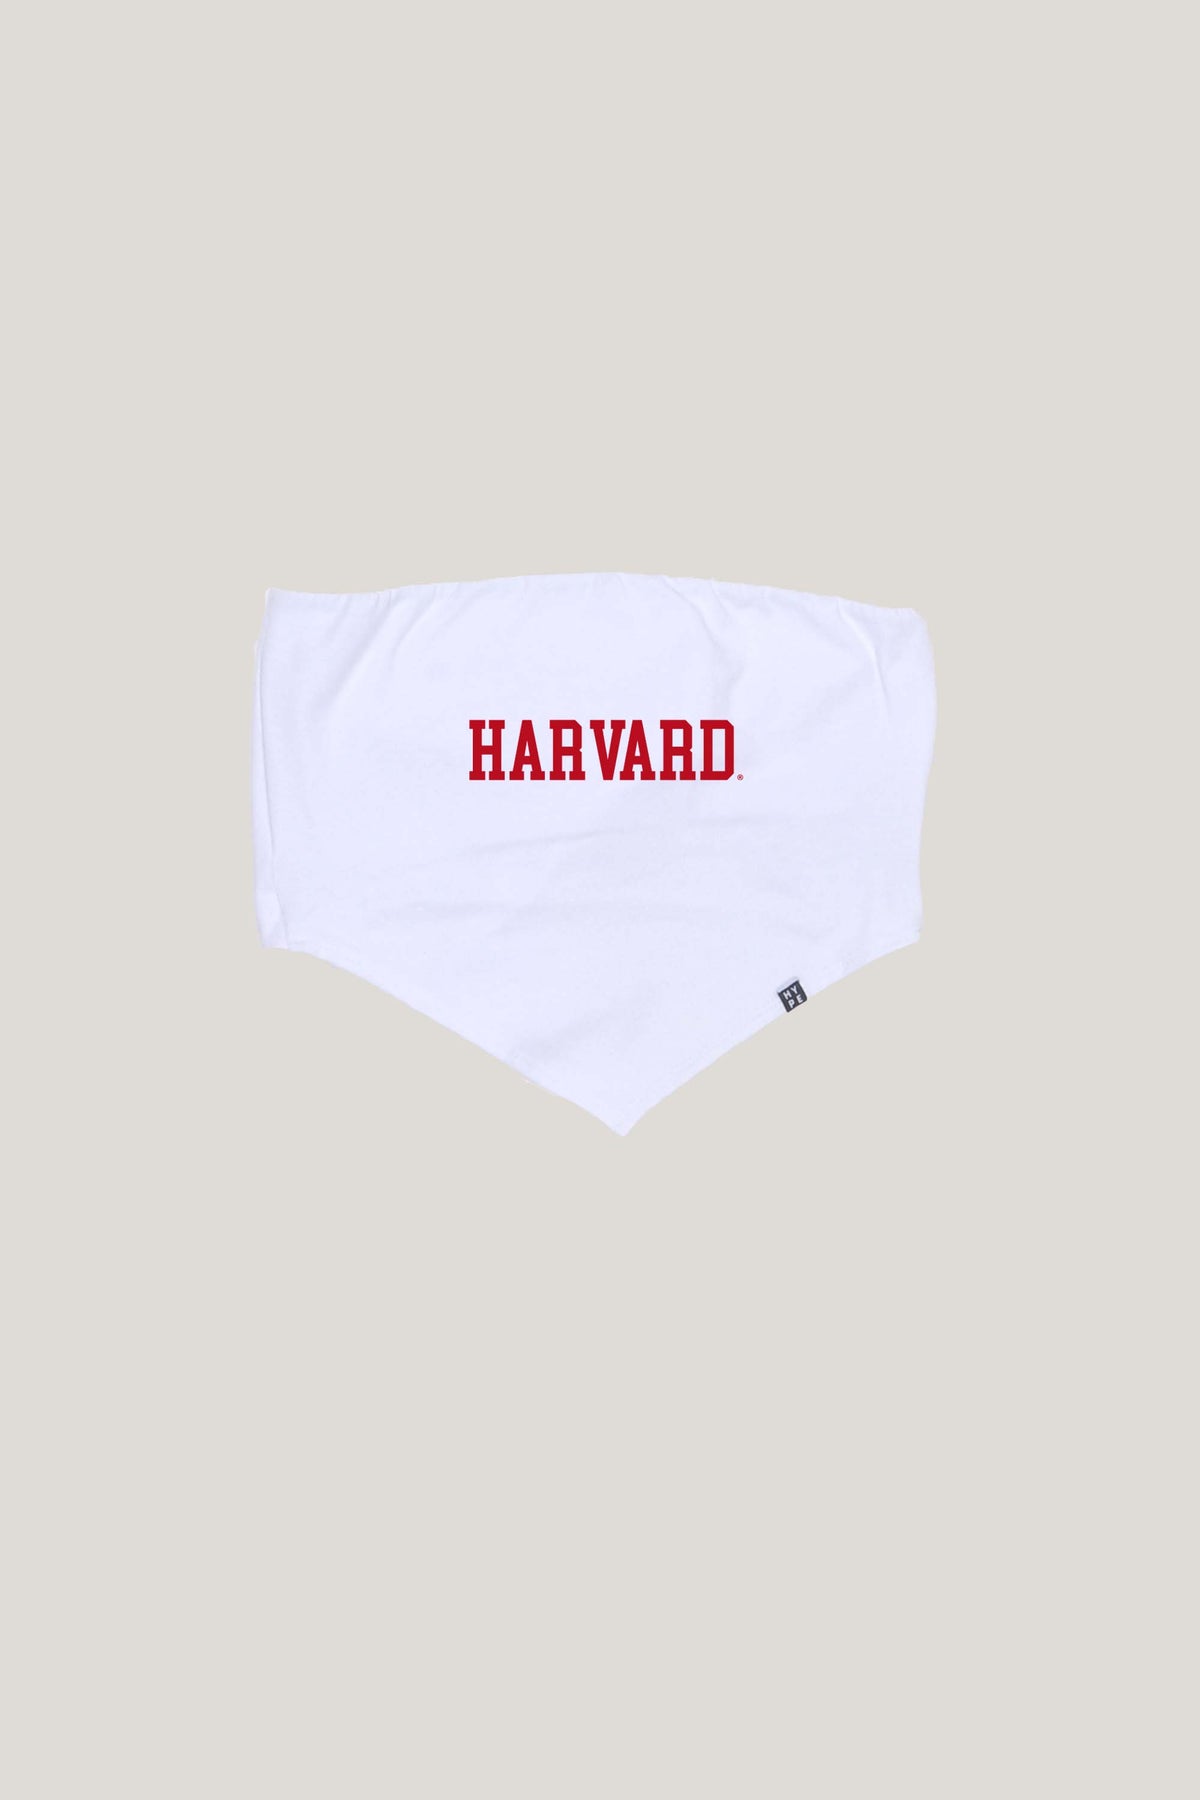 Harvard Bandana Top